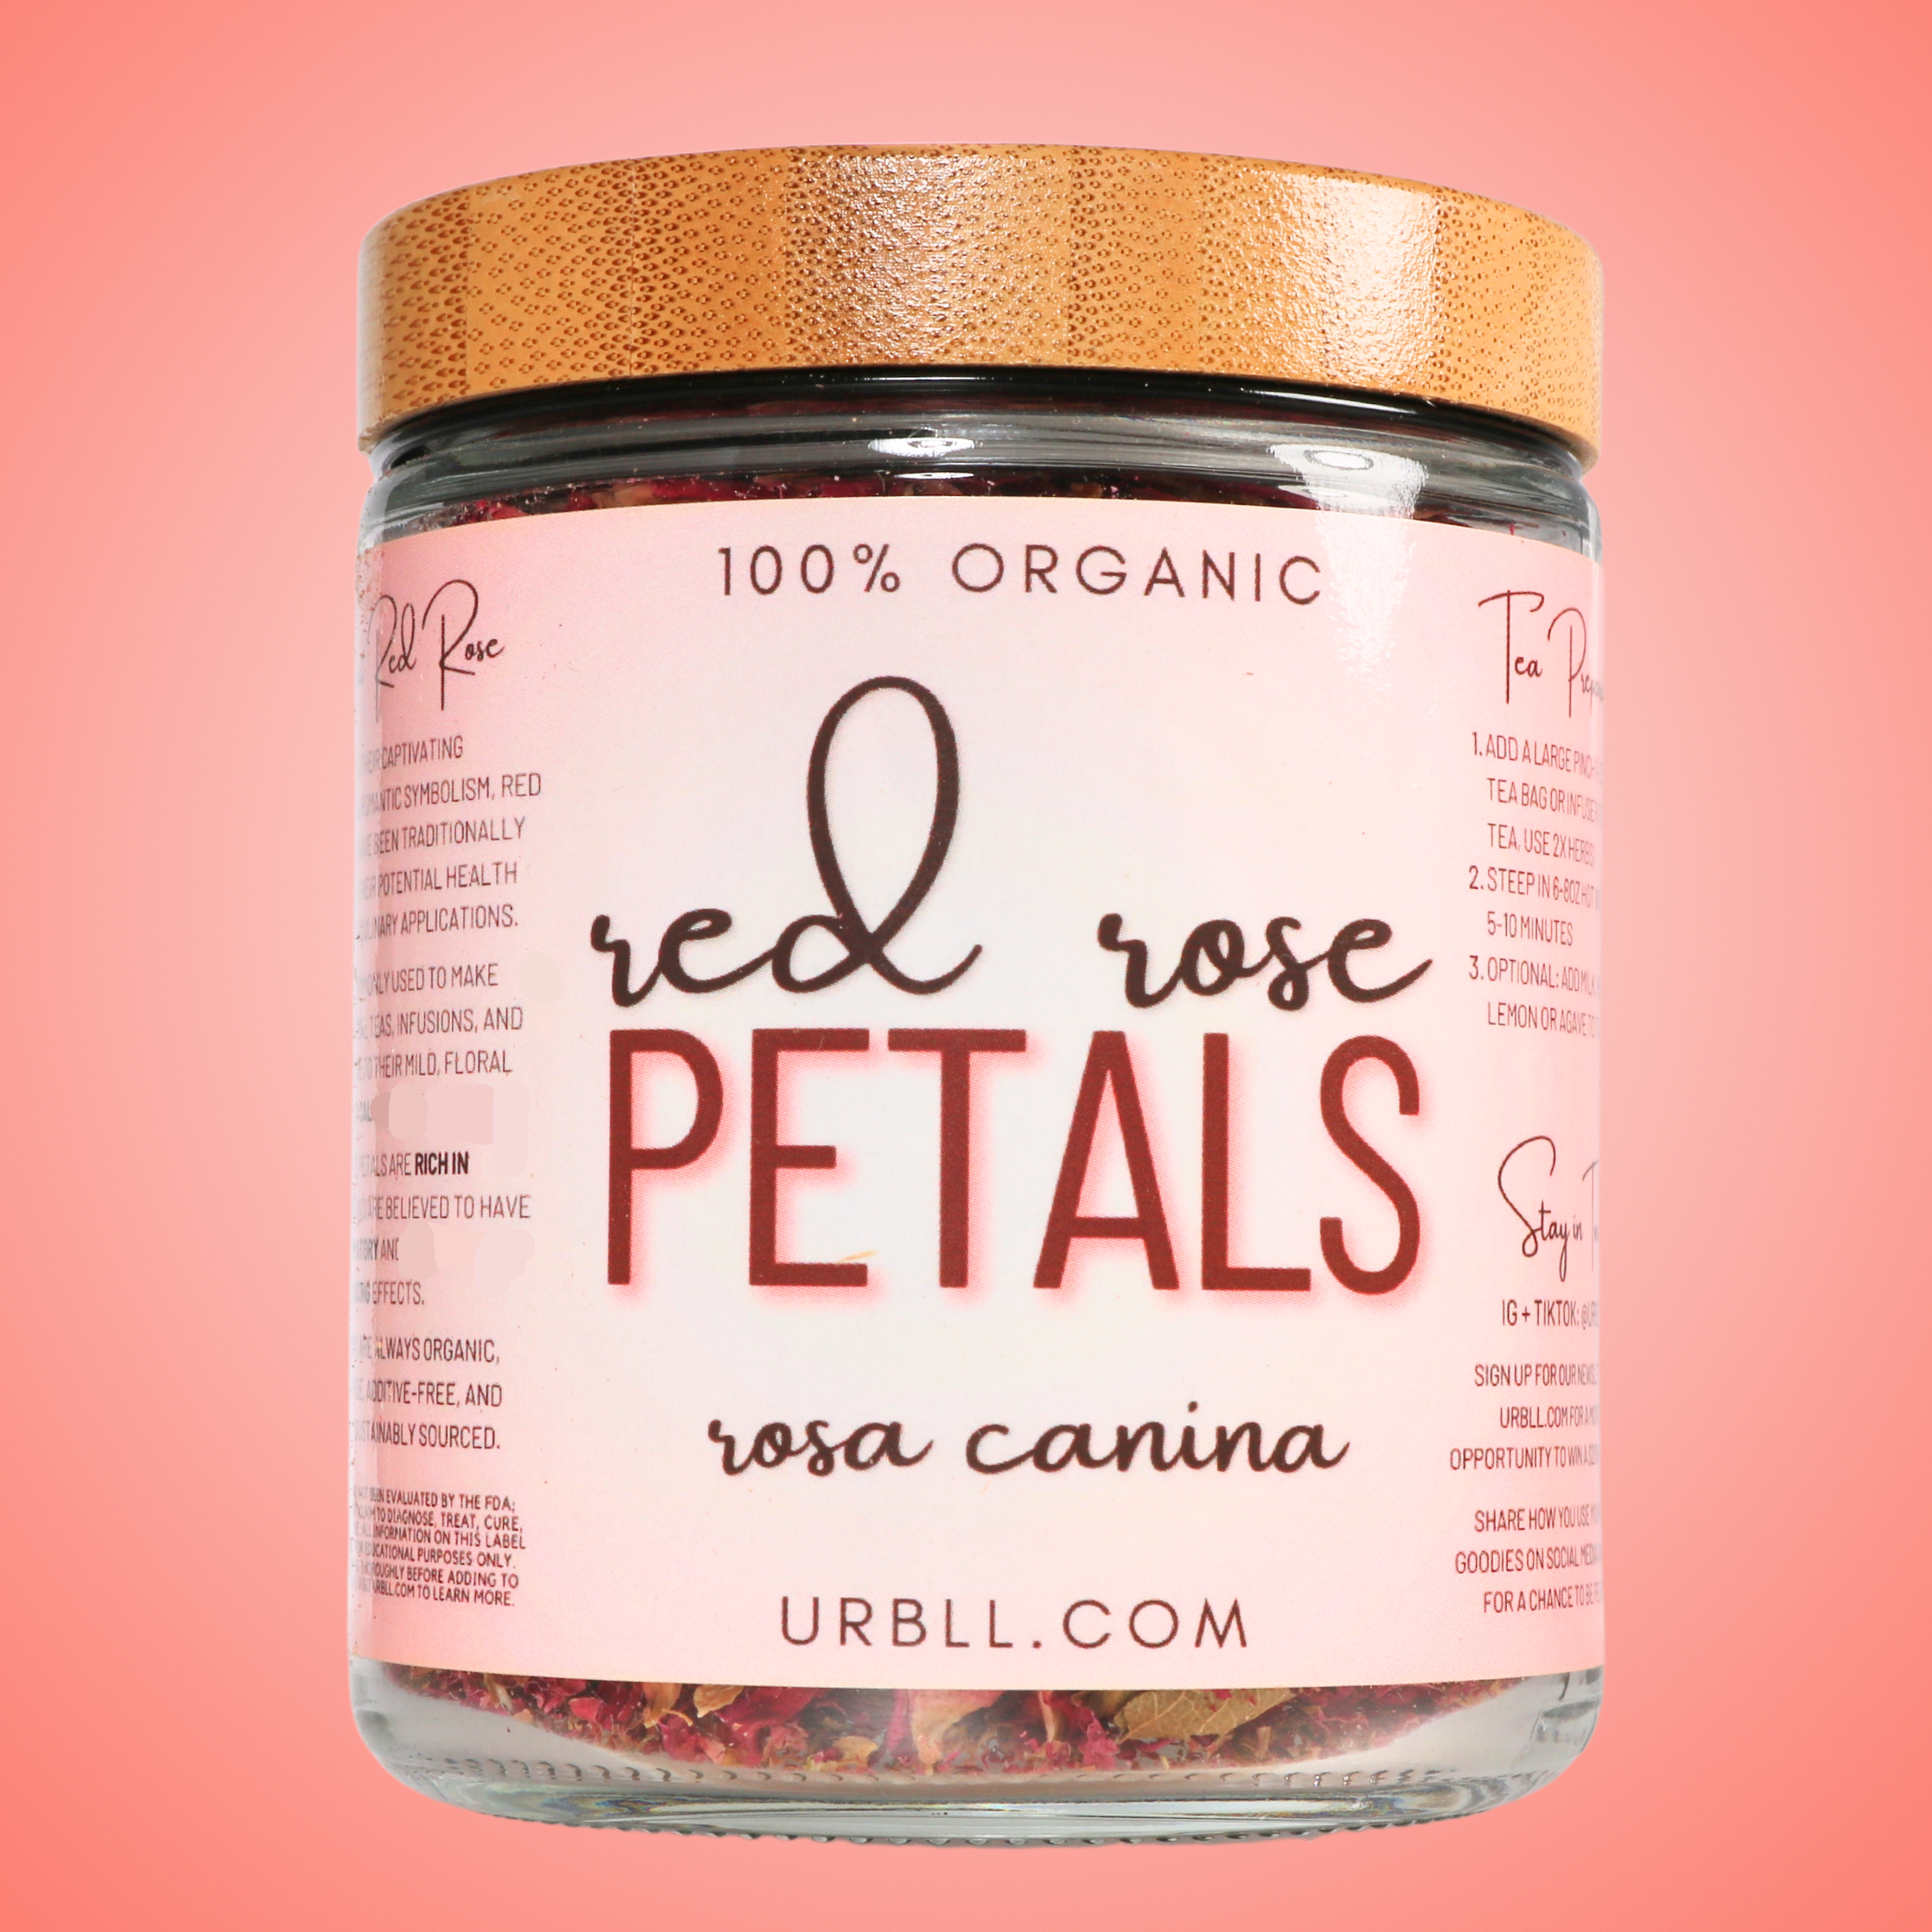 Red Rose Petals • Organic